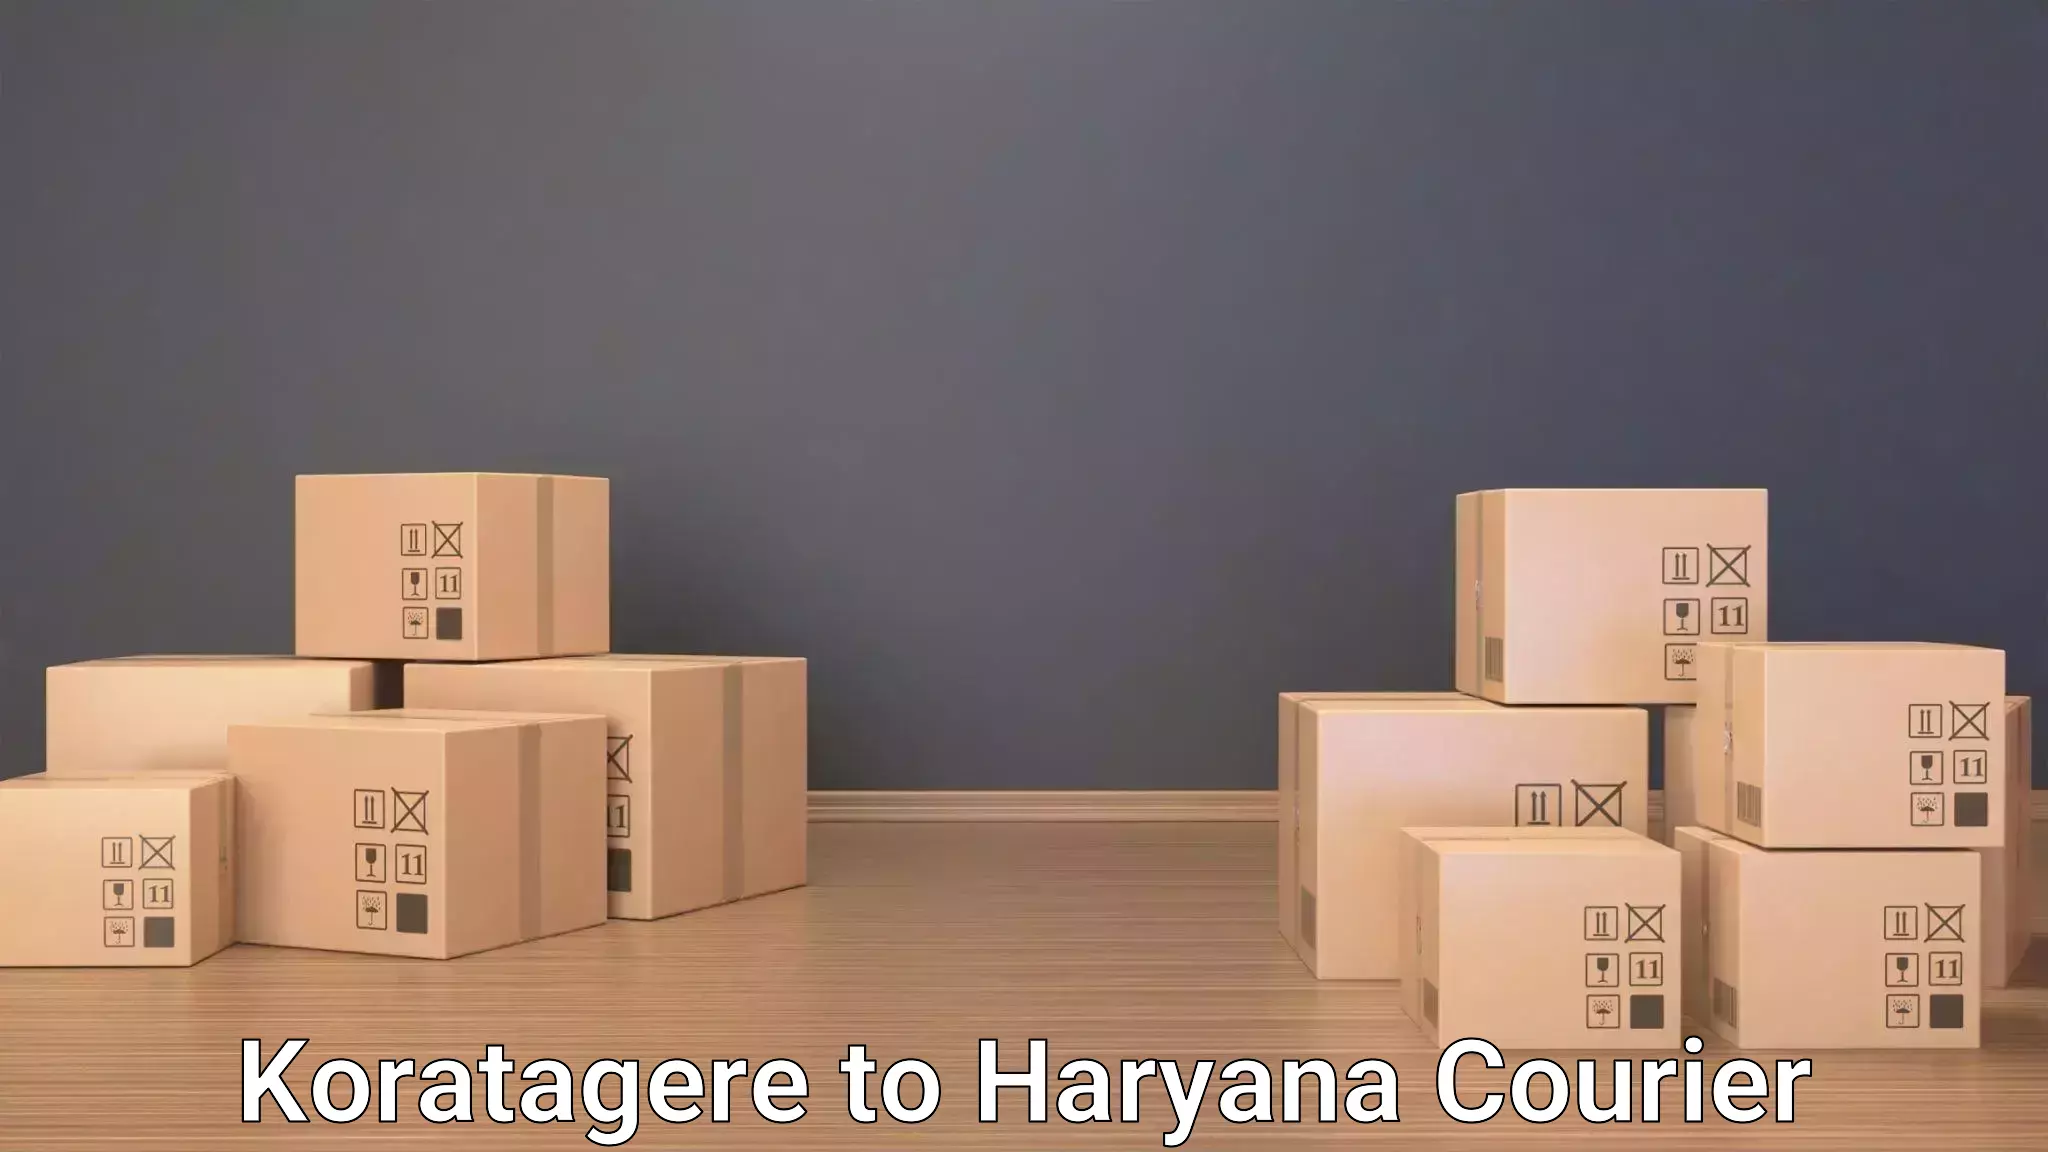 Luggage transport consultancy Koratagere to NCR Haryana